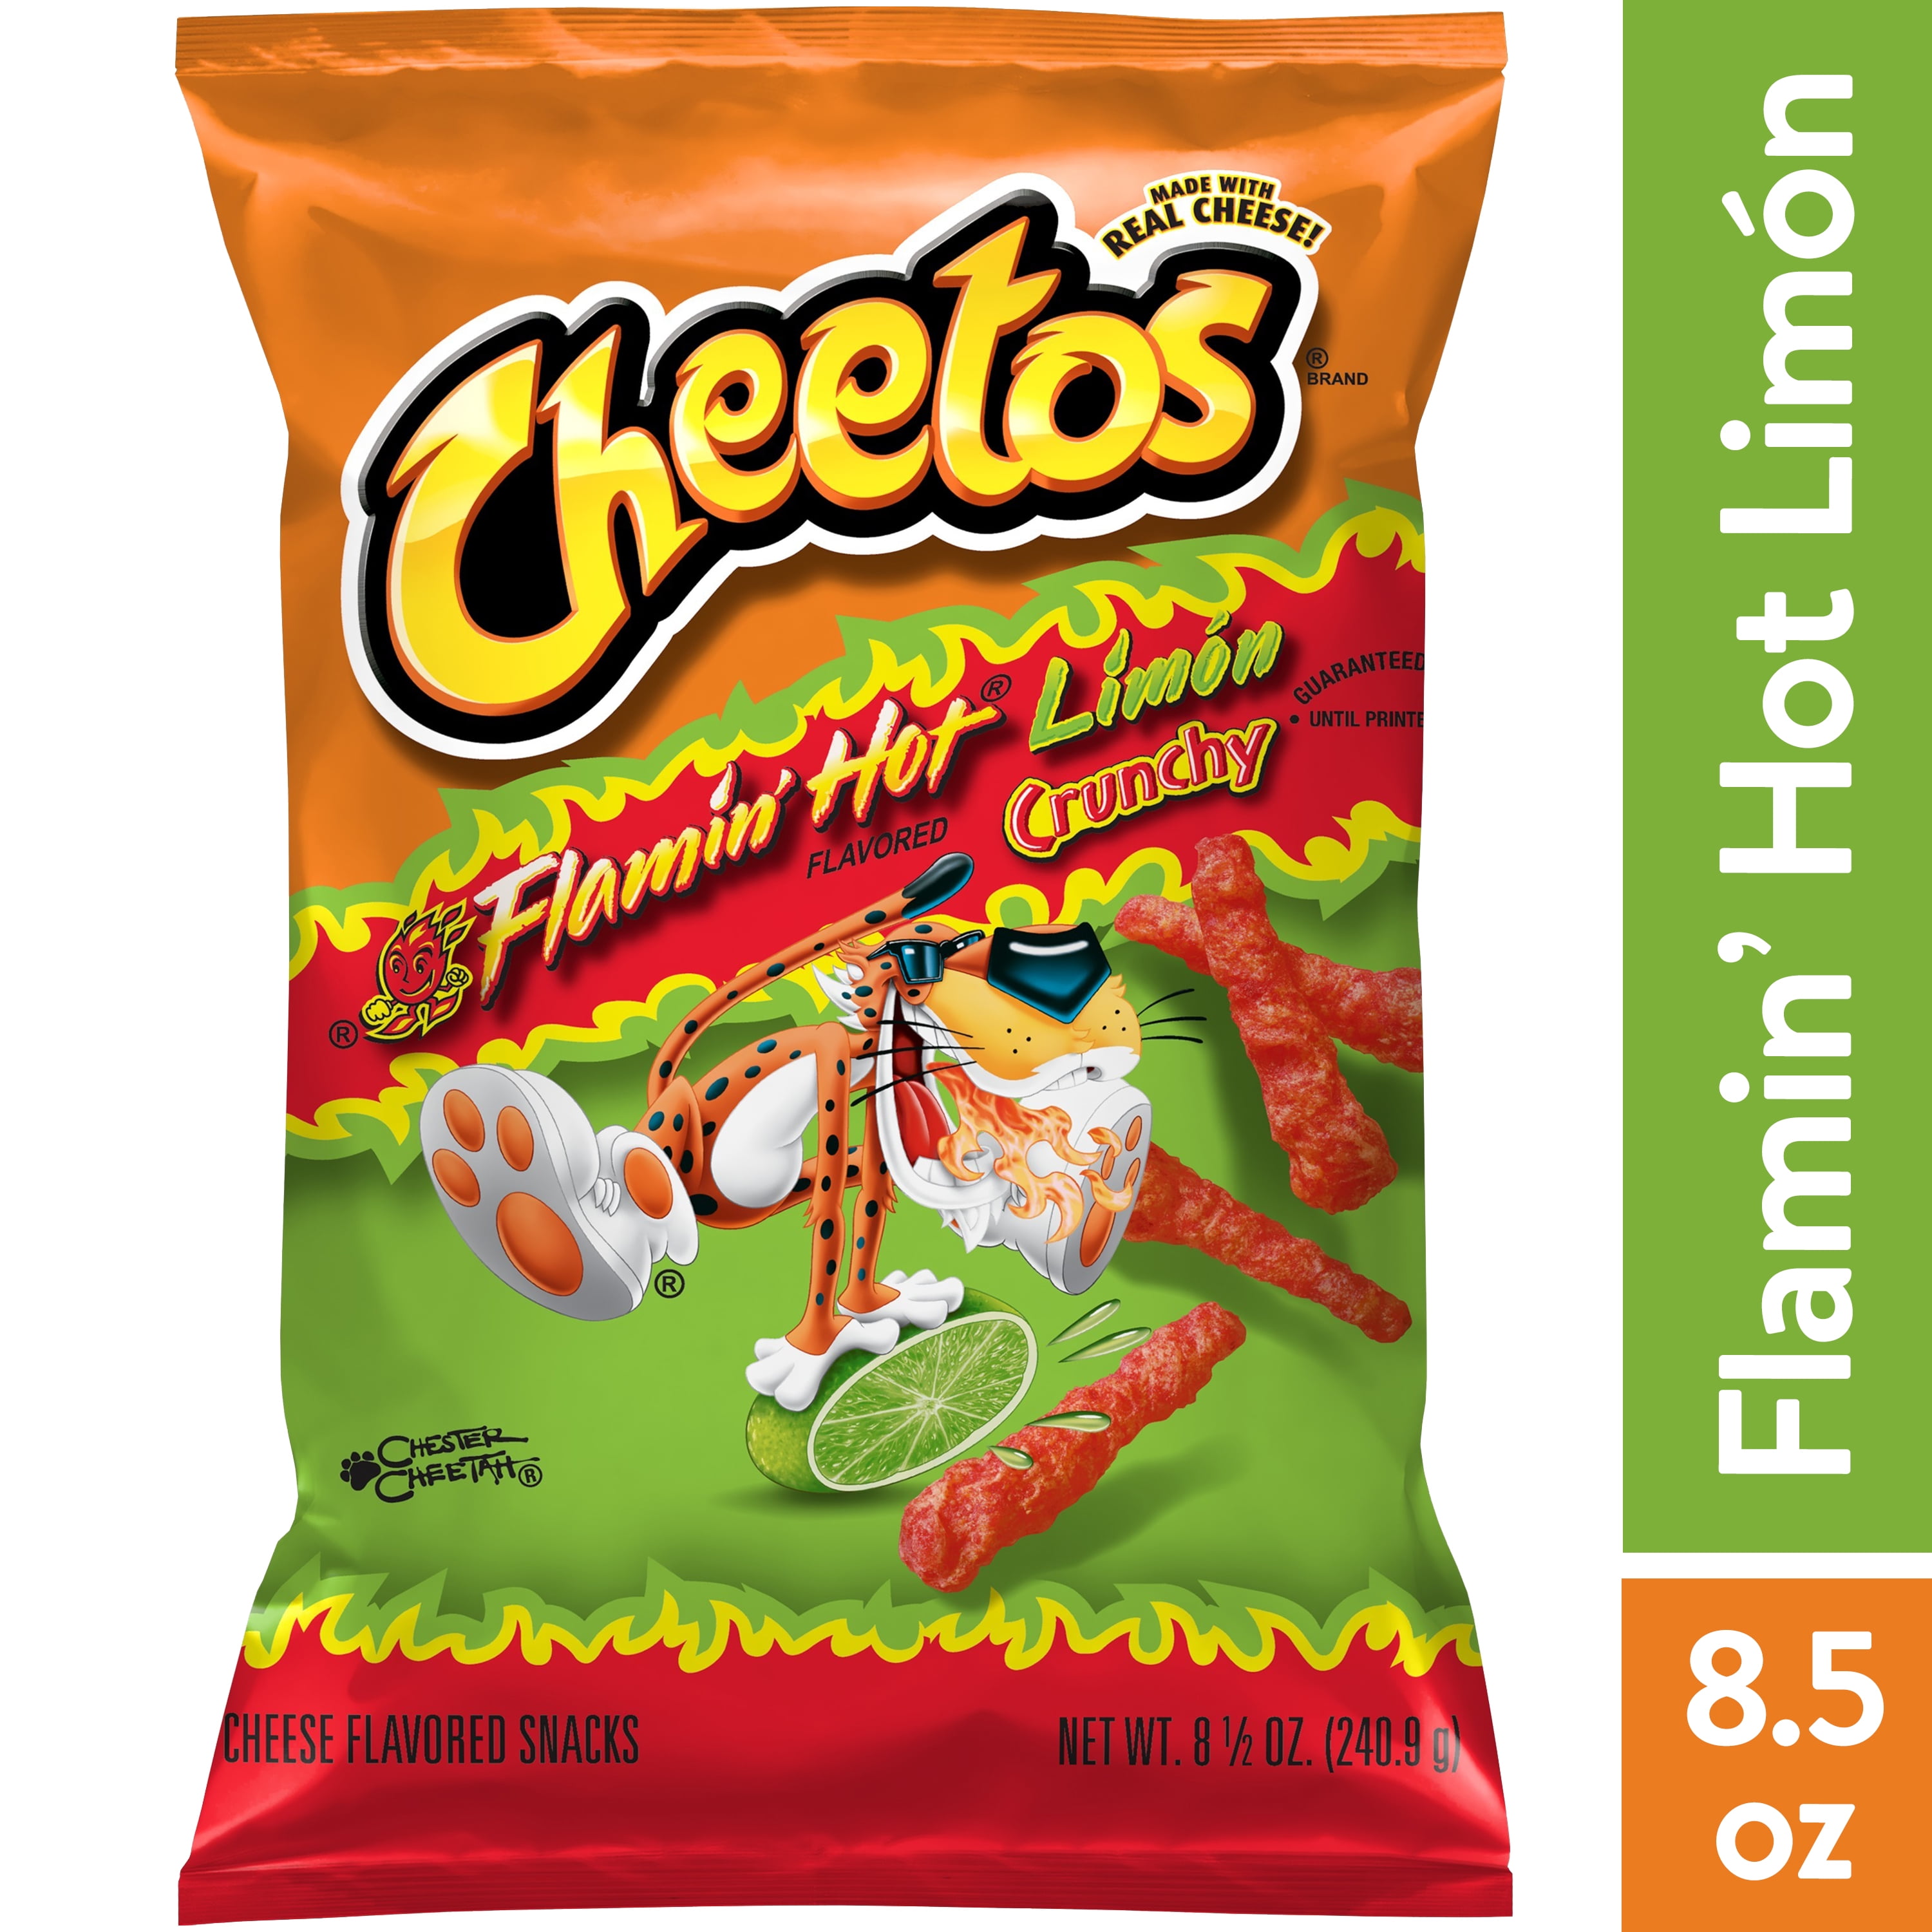 Cheetos Flamin' Hot Crunchy 2.0 oz (Pack of 5)